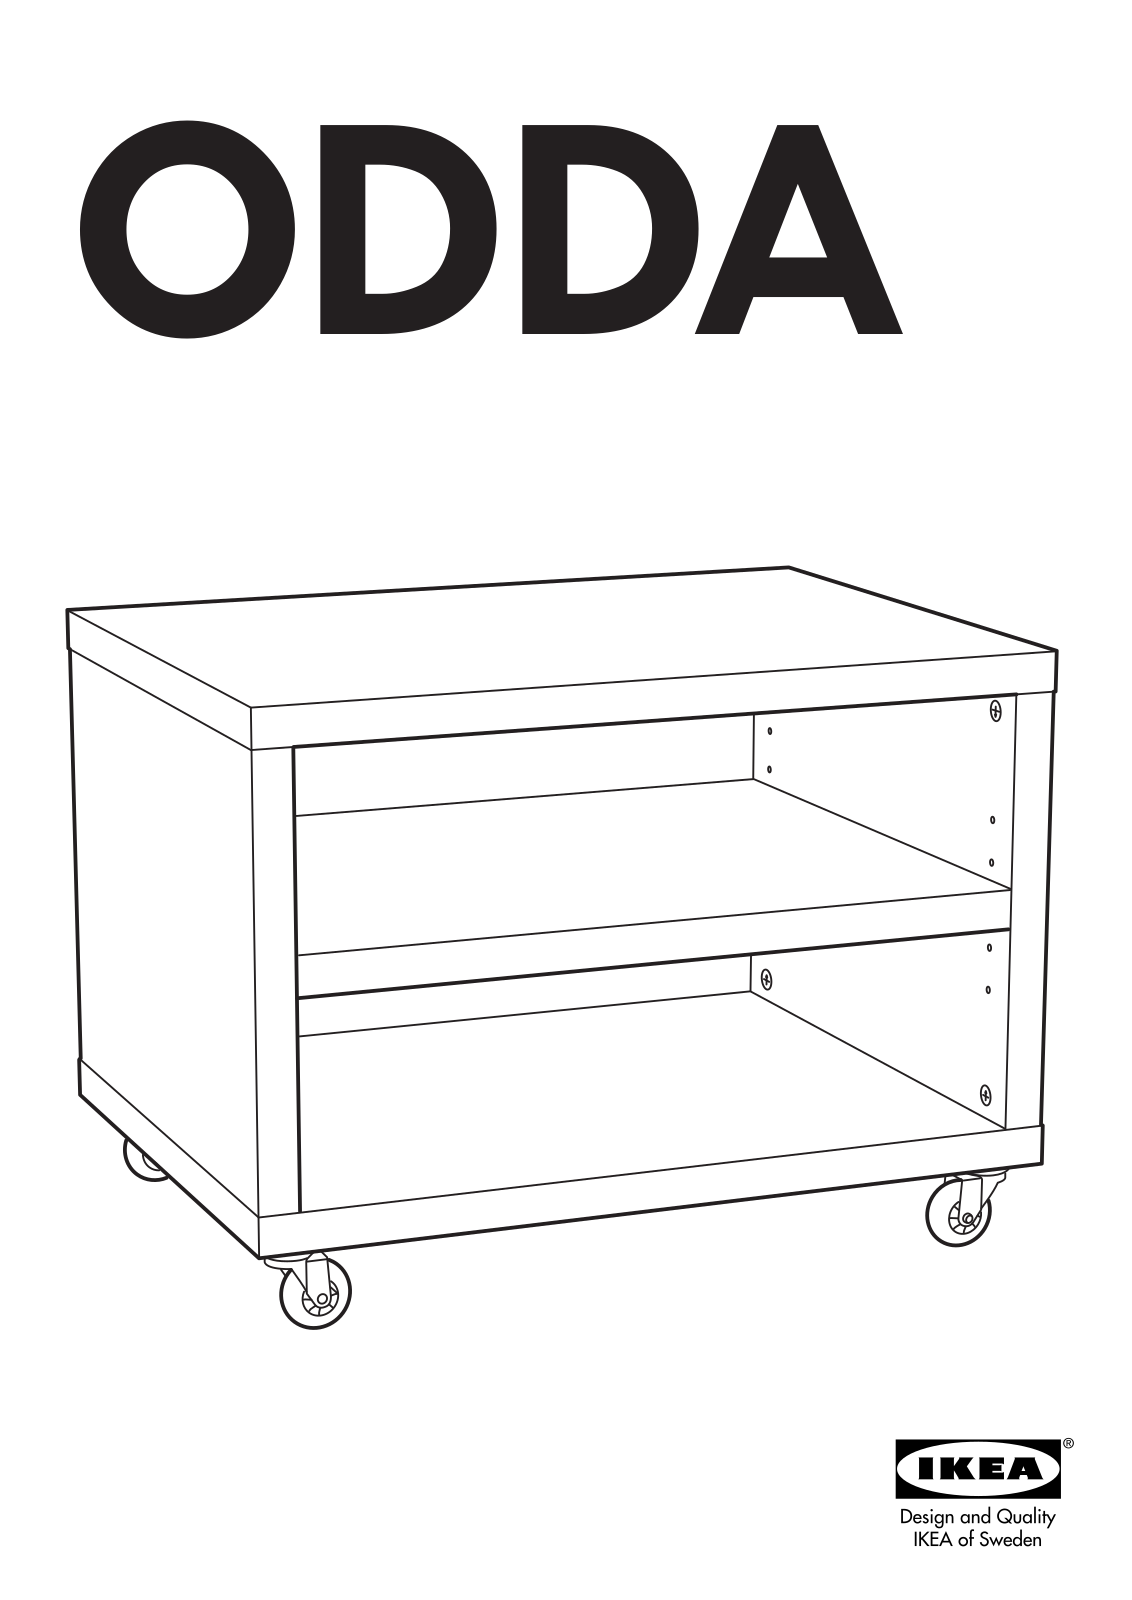 IKEA ODDA BEDSIDE TABLE 24X17 Assembly Instruction